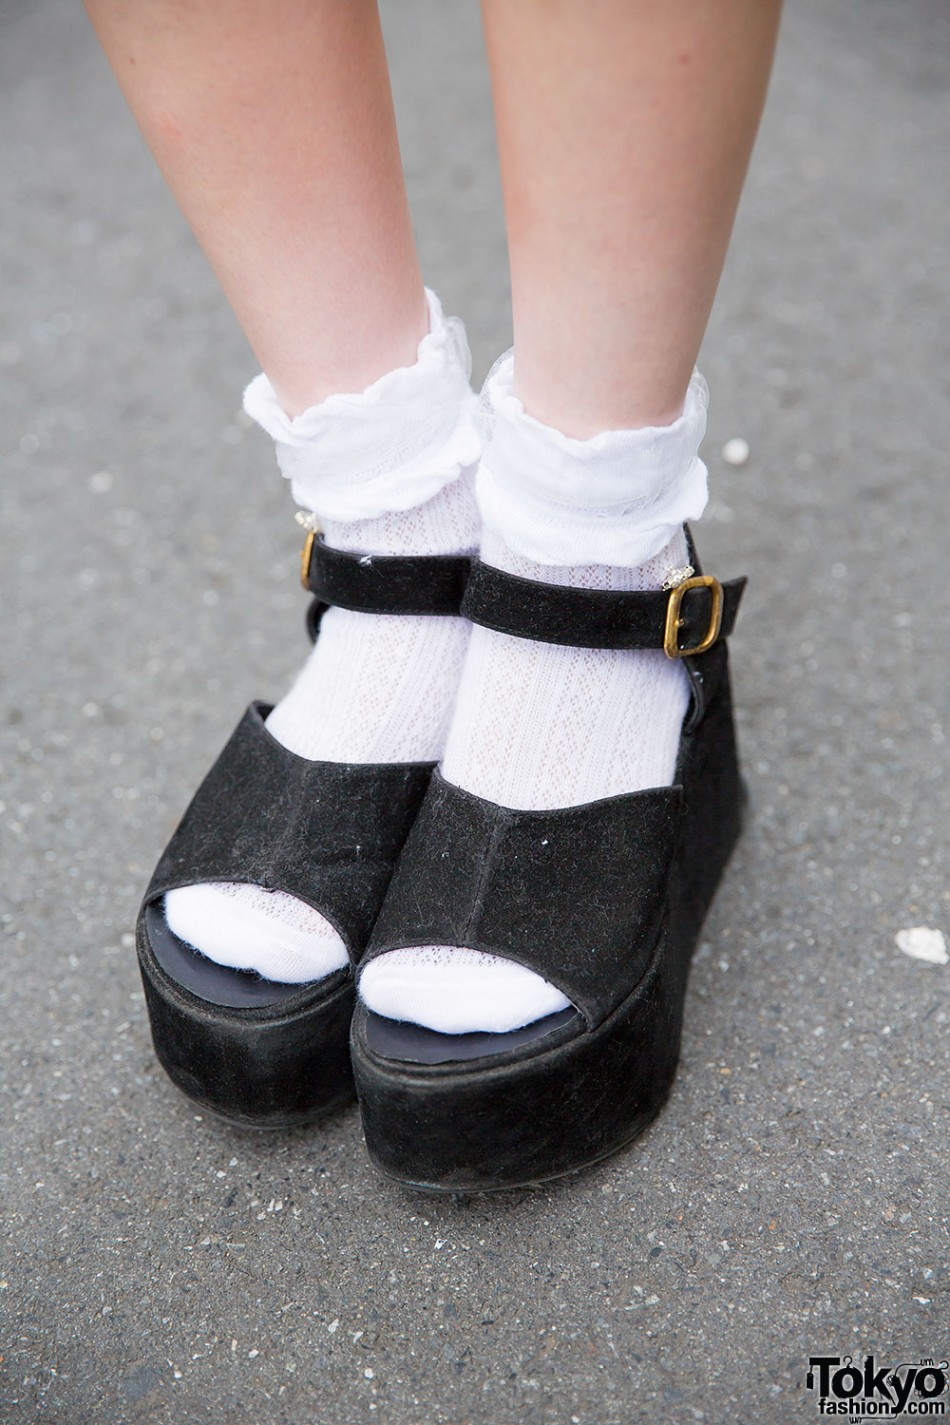 Harajuku Girls in Platform Shoes w/ Miauler Mew, Ingni & One Spo ...